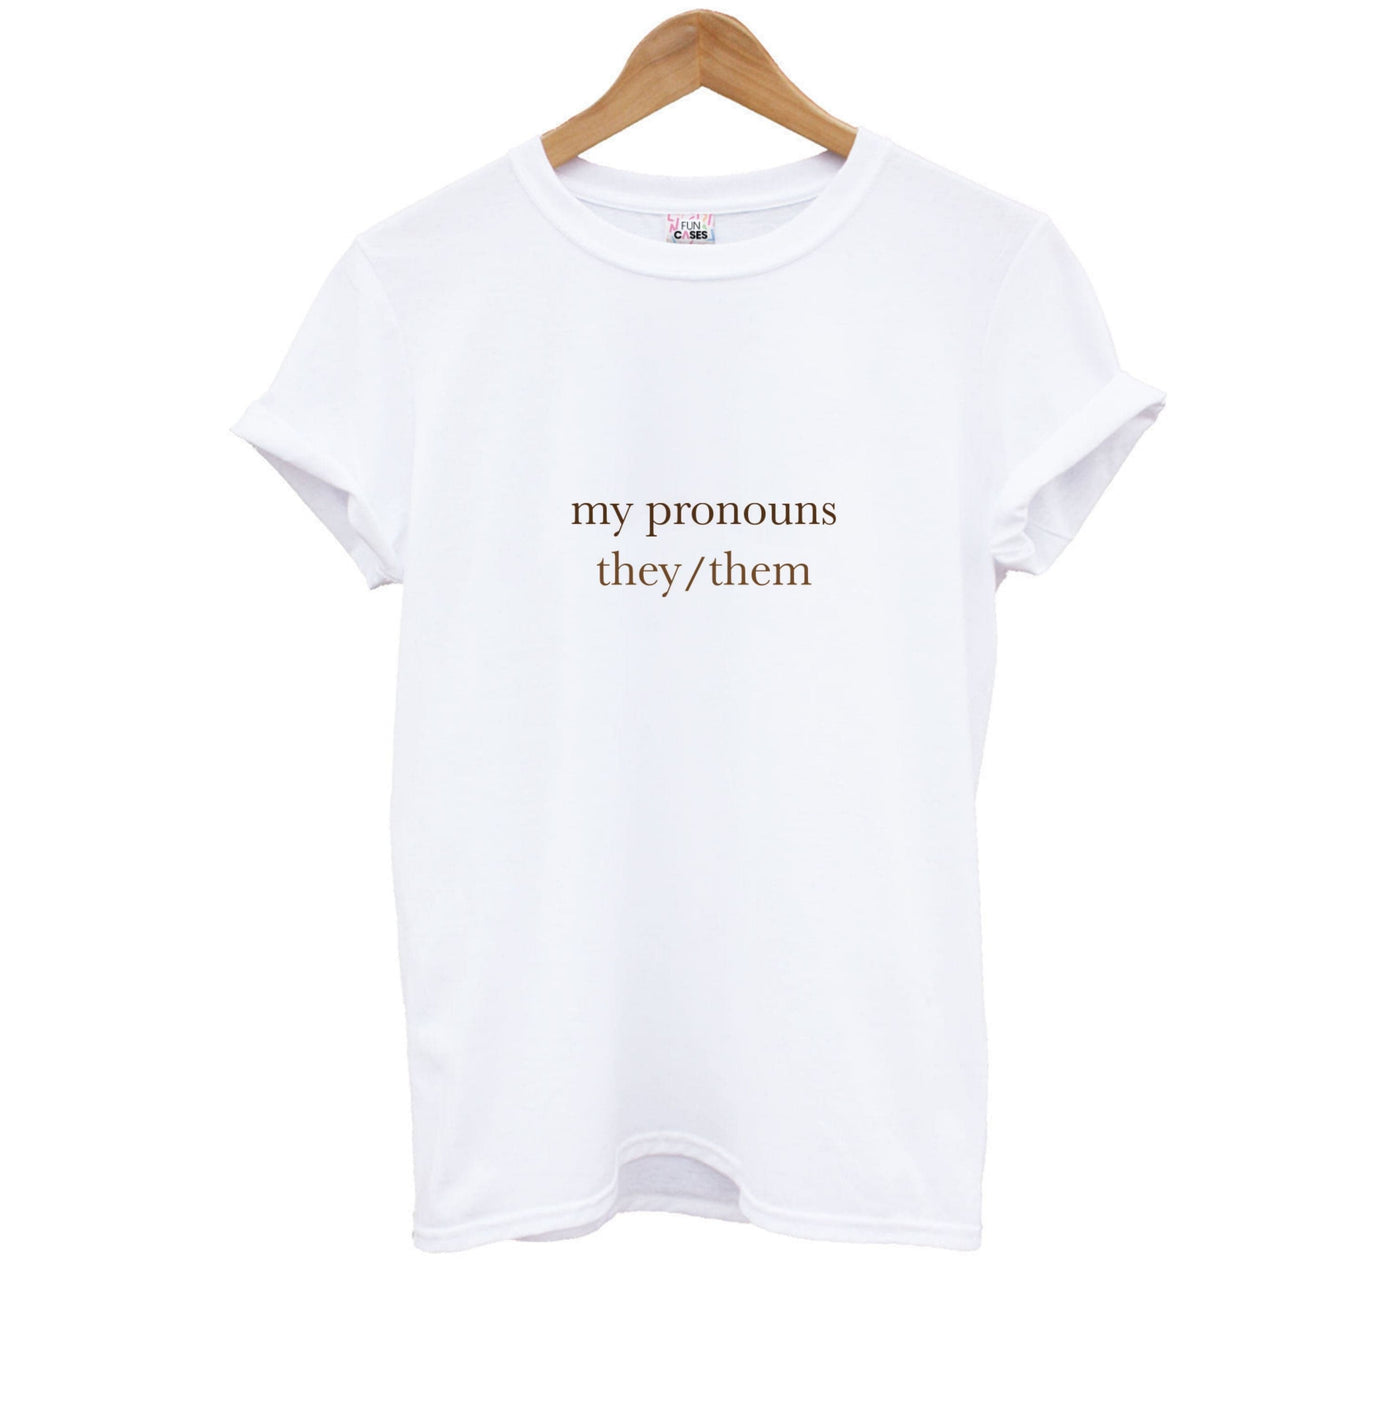 They & Them - Pronouns Kids T-Shirt